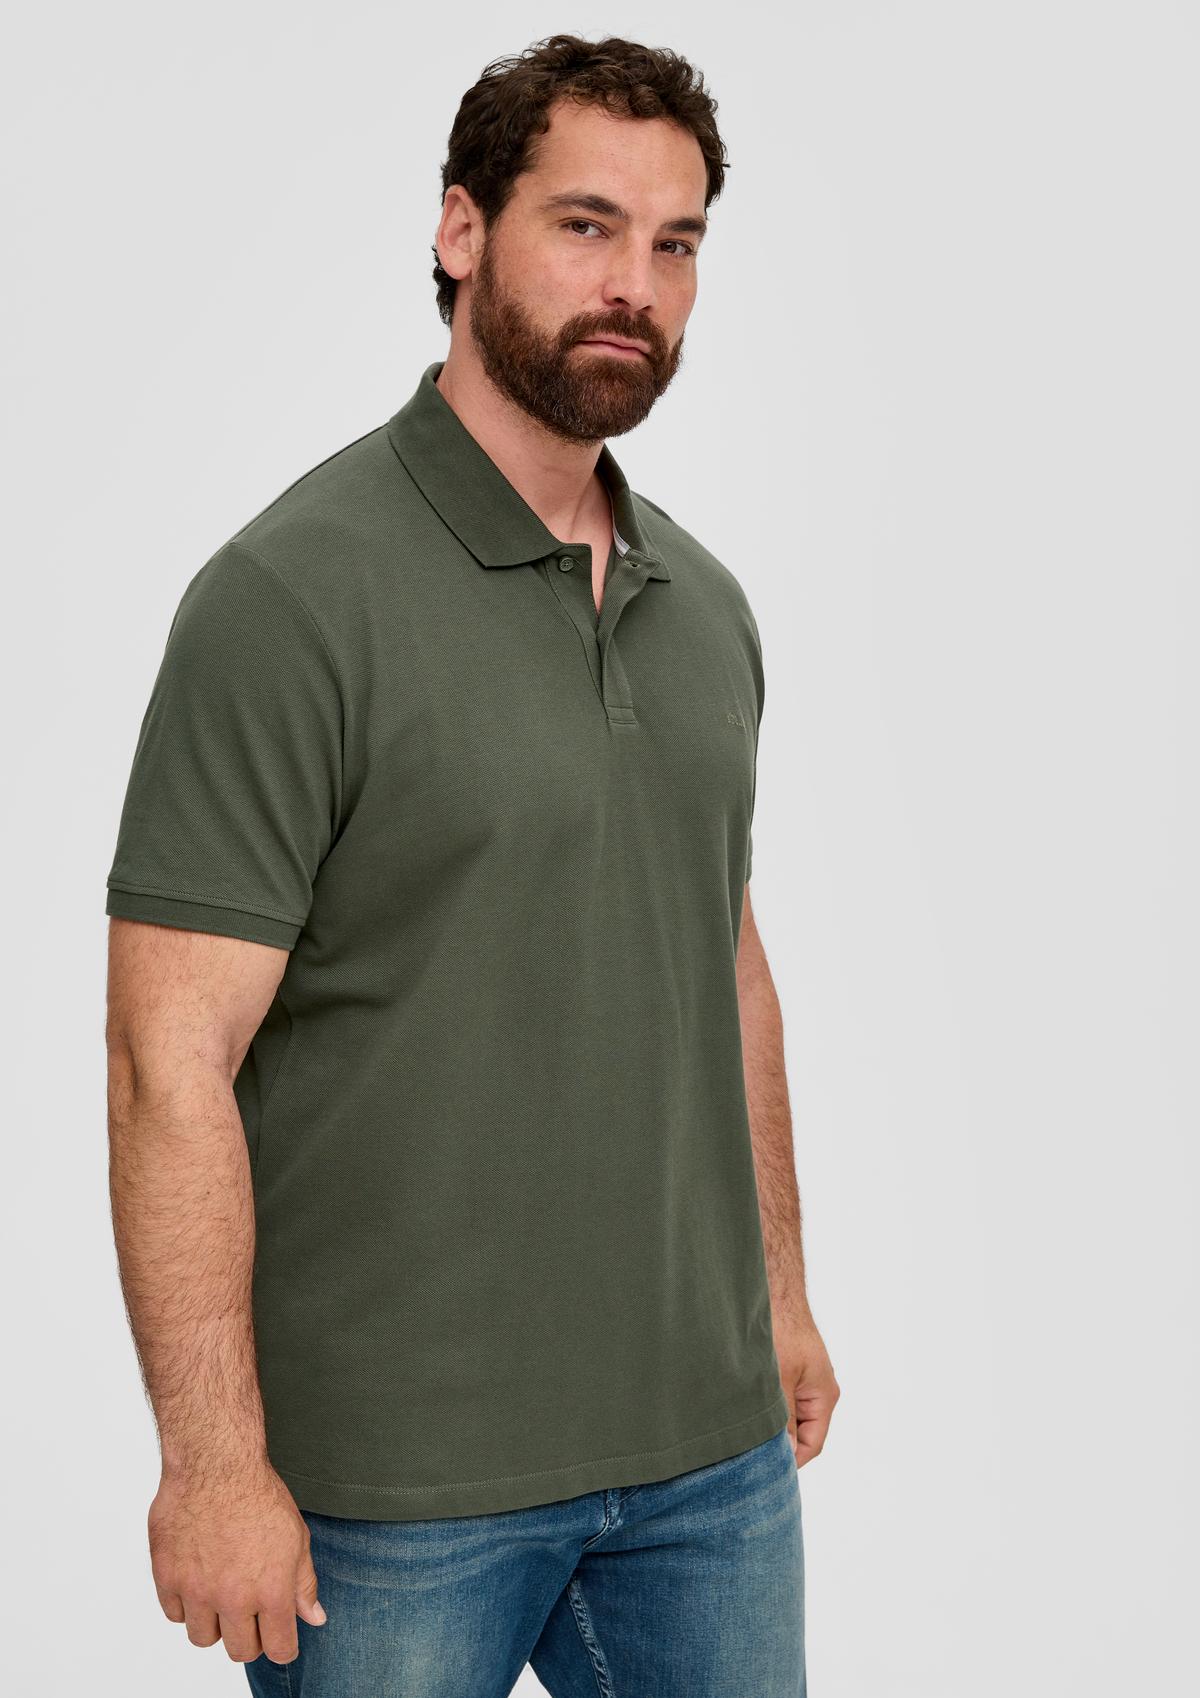 print a shirt Polo with navy - minimalist